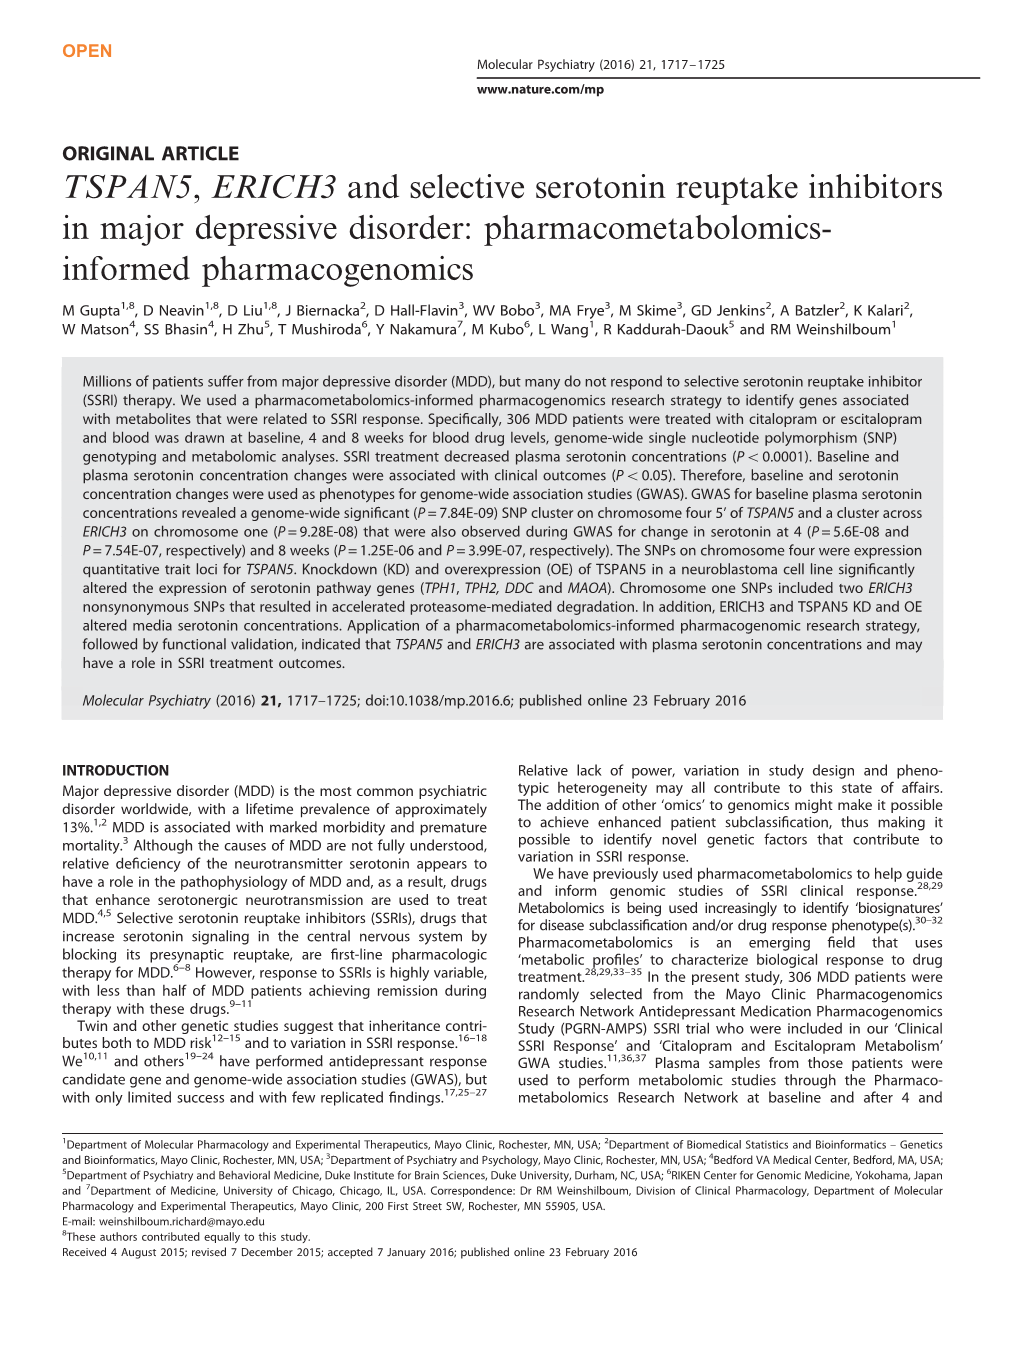 TSPAN5, ERICH3 and Selective Serotonin Reuptake Inhibitors in Major Depressive Disorder: Pharmacometabolomics- Informed Pharmacogenomics